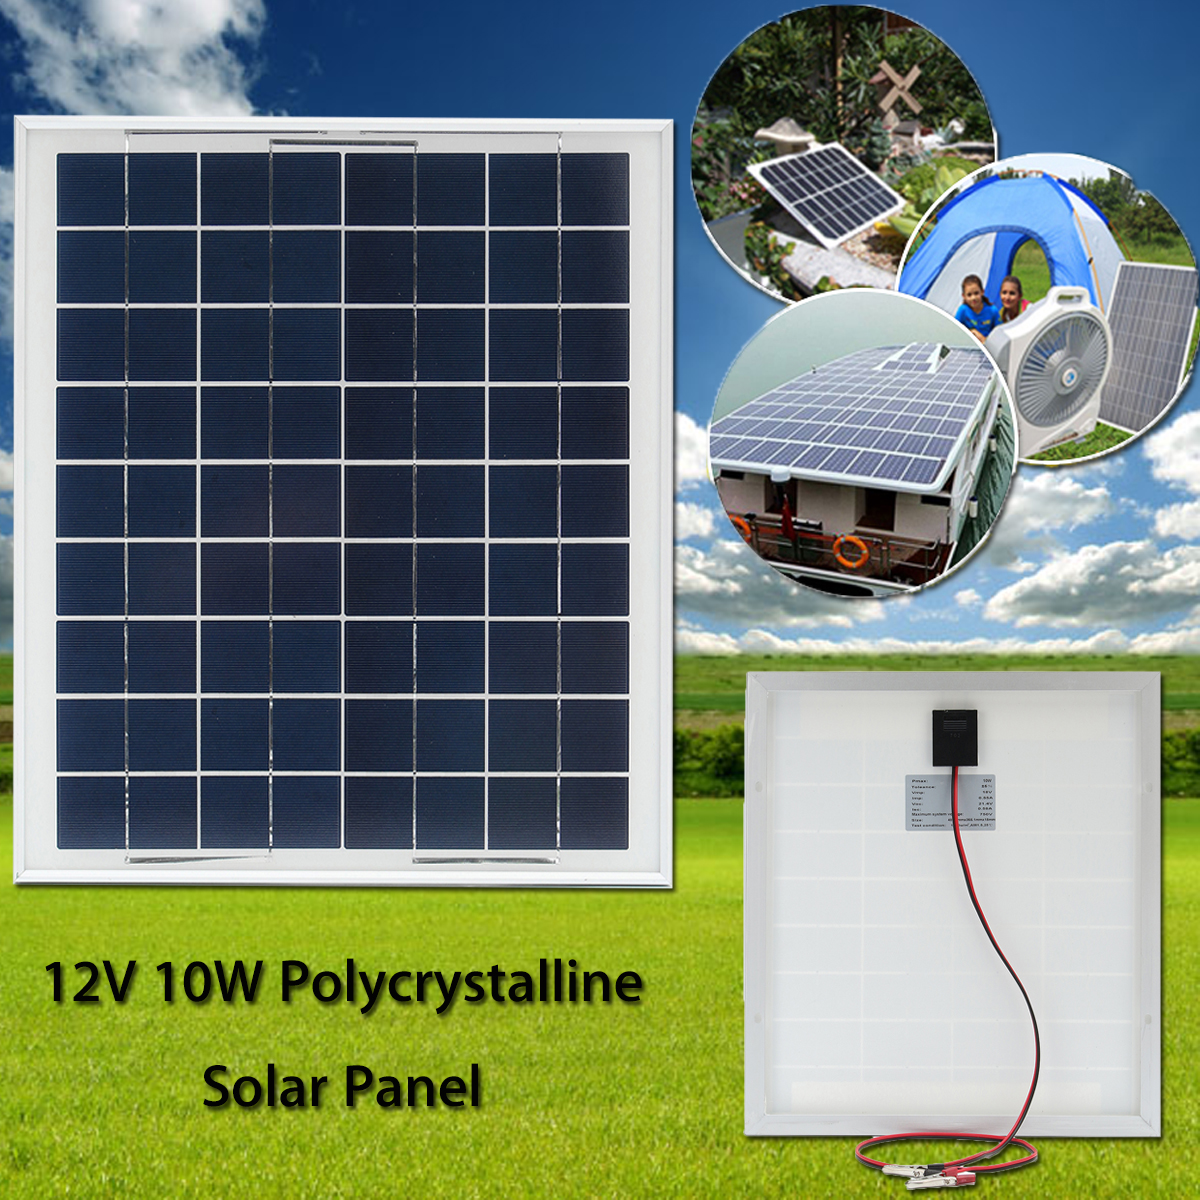 12V 10W Aluminum Alloy Frame Polycrystalline Solar Panel With Junction Box 10